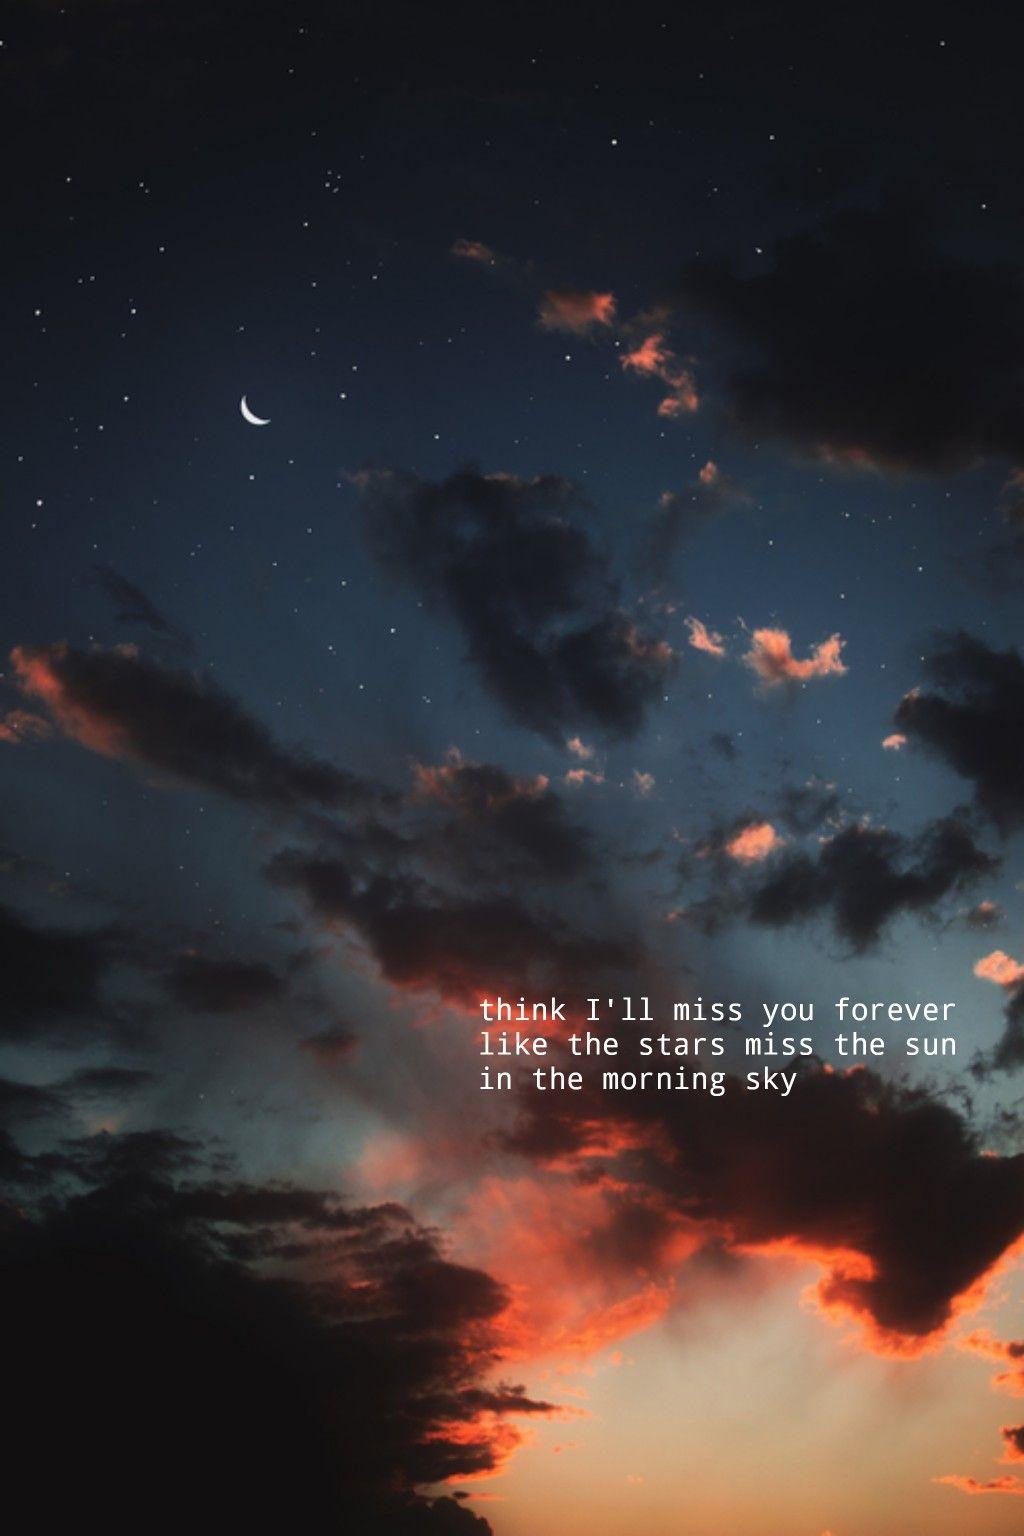 Lana del rey Summertime sadness quote night sky sunrise